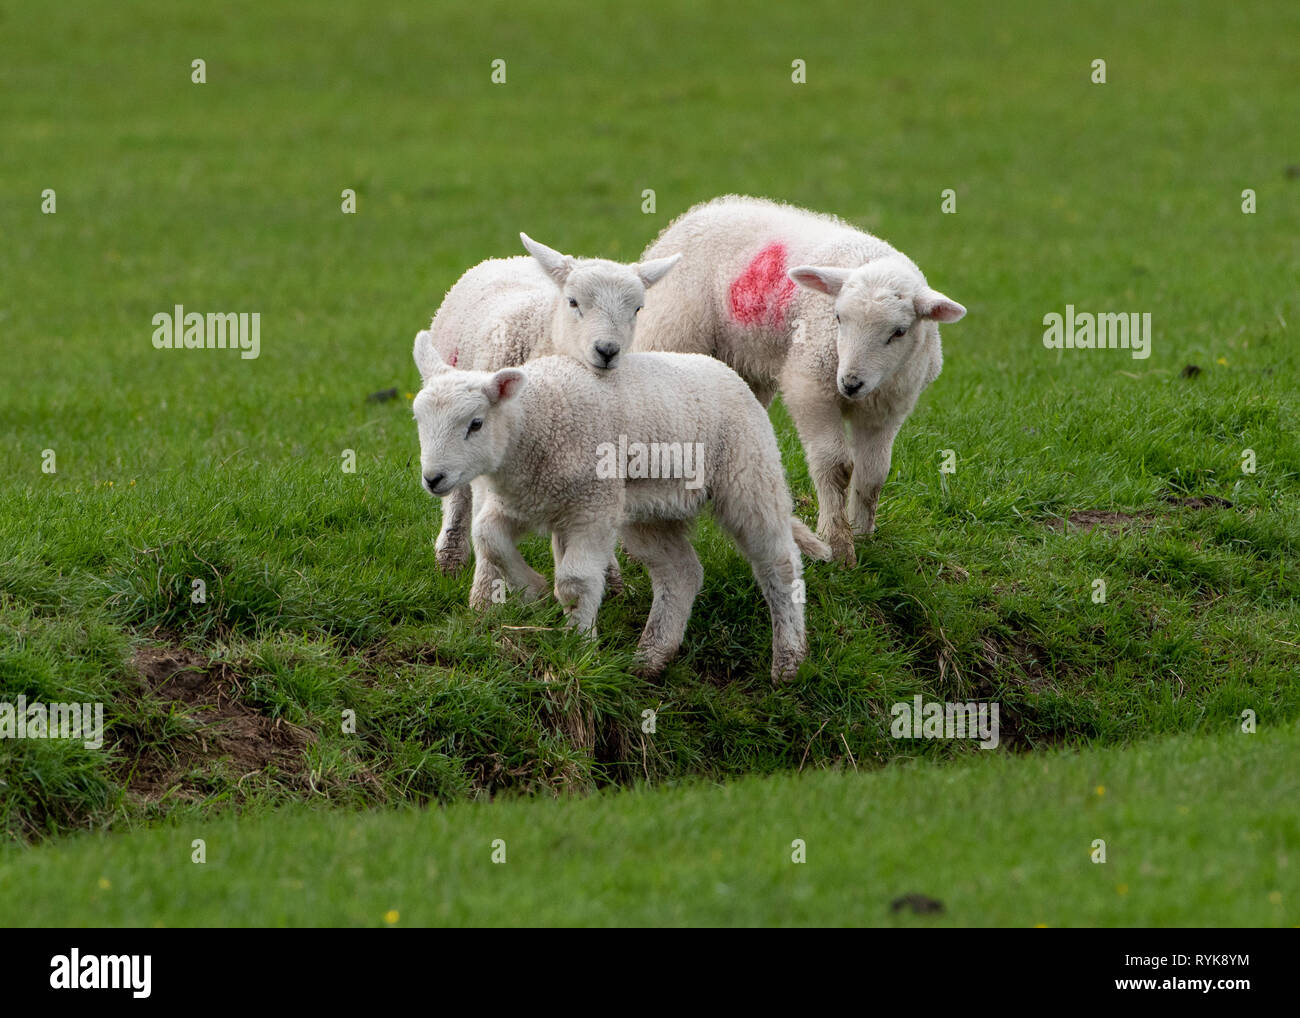 Texel sired lambs from Mule ewes playing, Dunsop Bridge, Lancashire, UK. Stock Photo